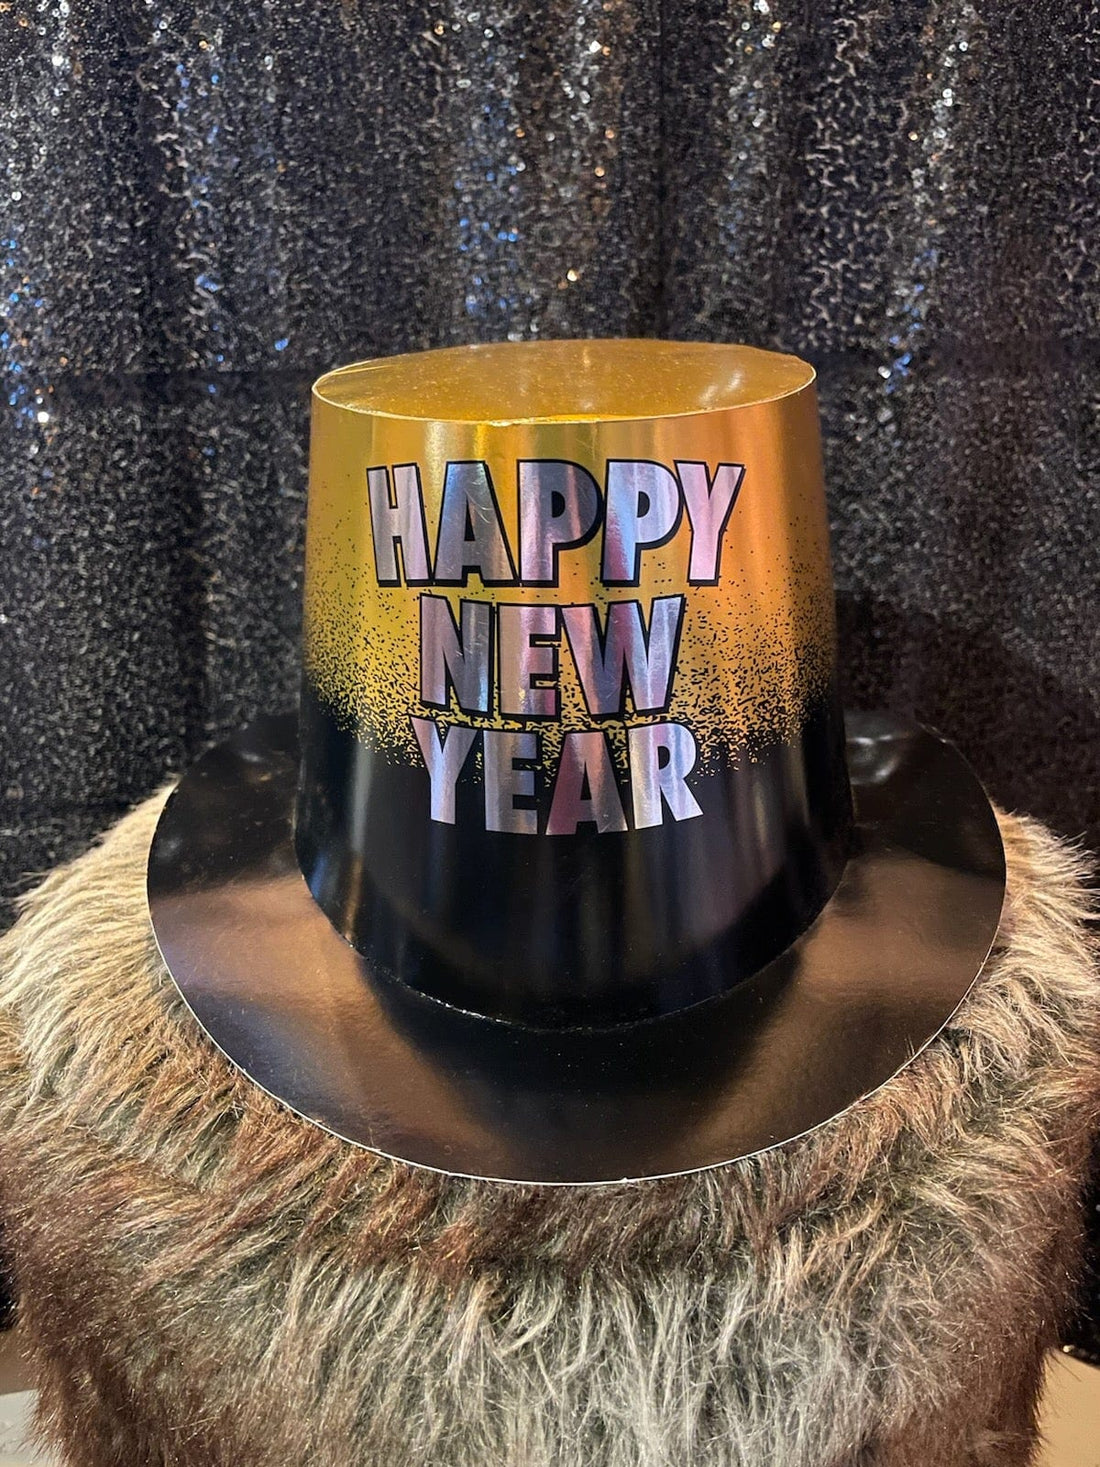 "Happy new year" hattur   gylltur og svartur